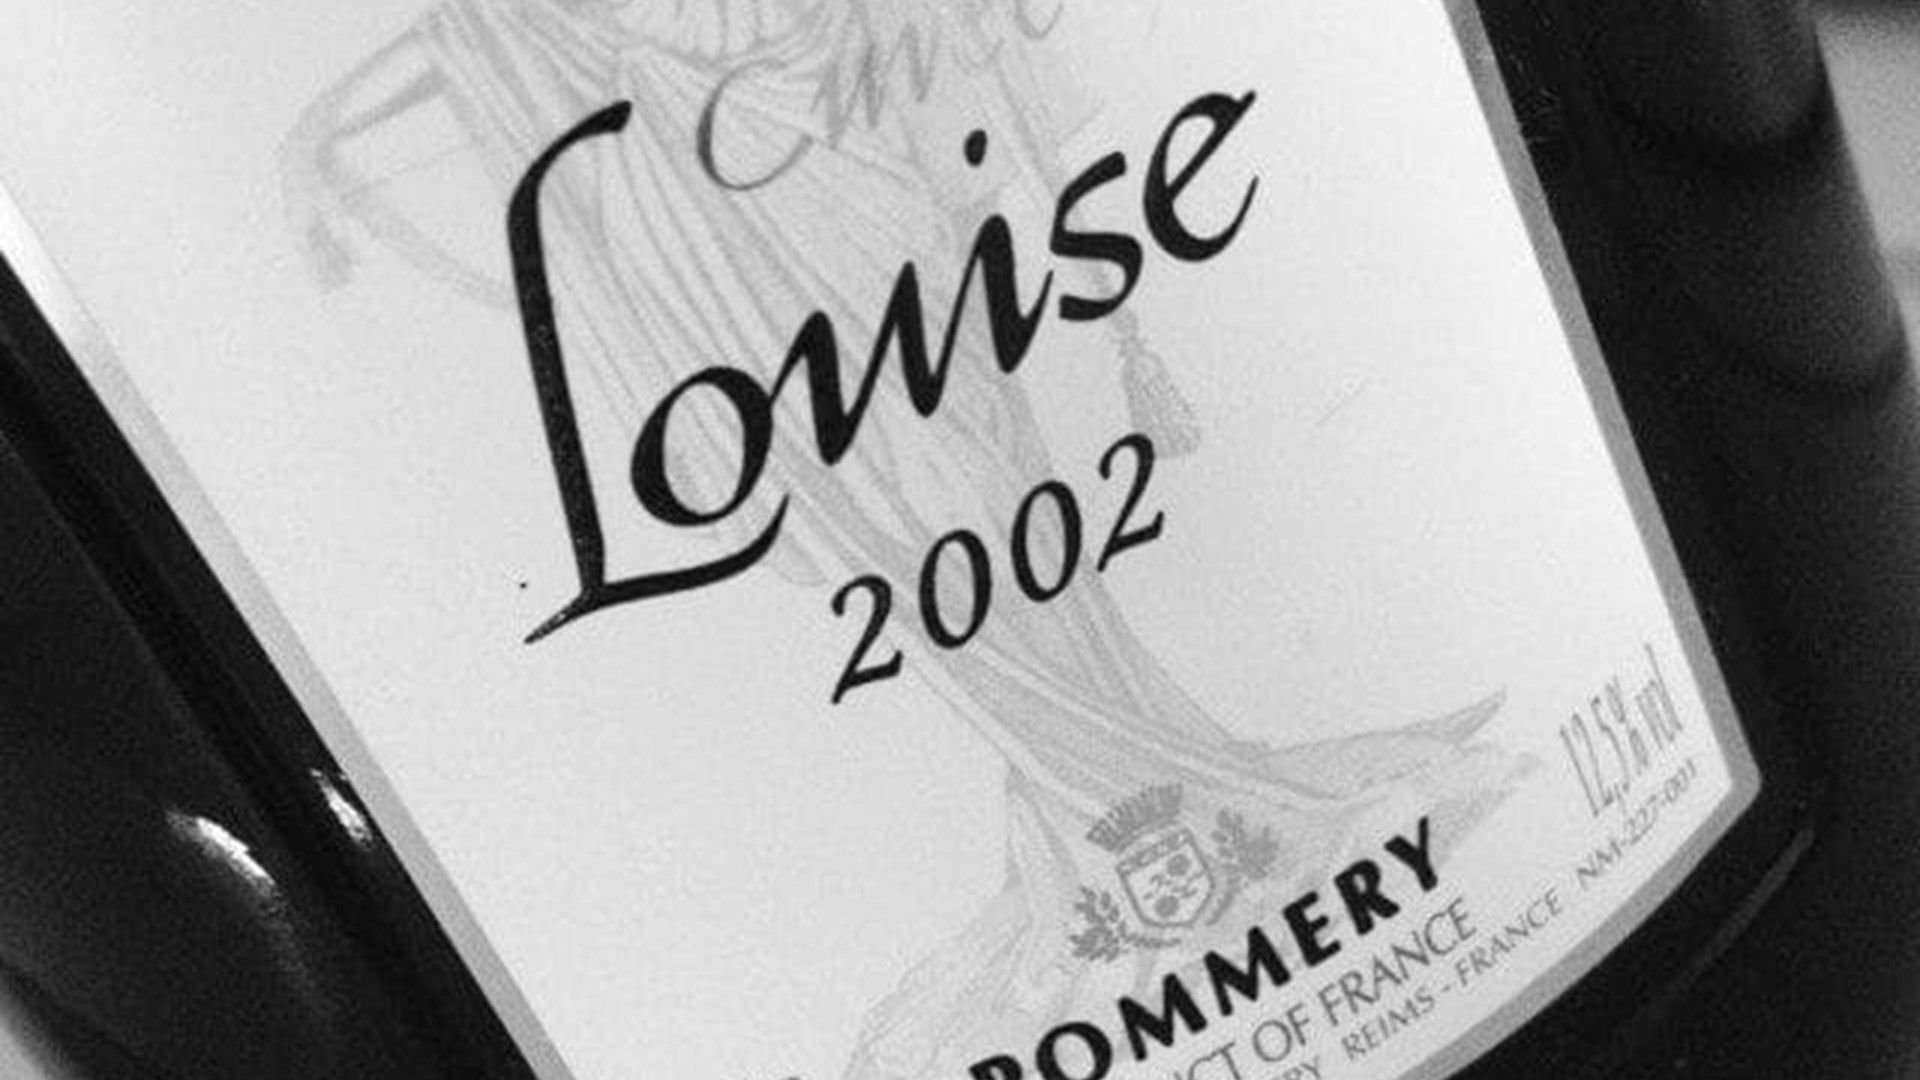 2002 Pommery Cuvée Louise